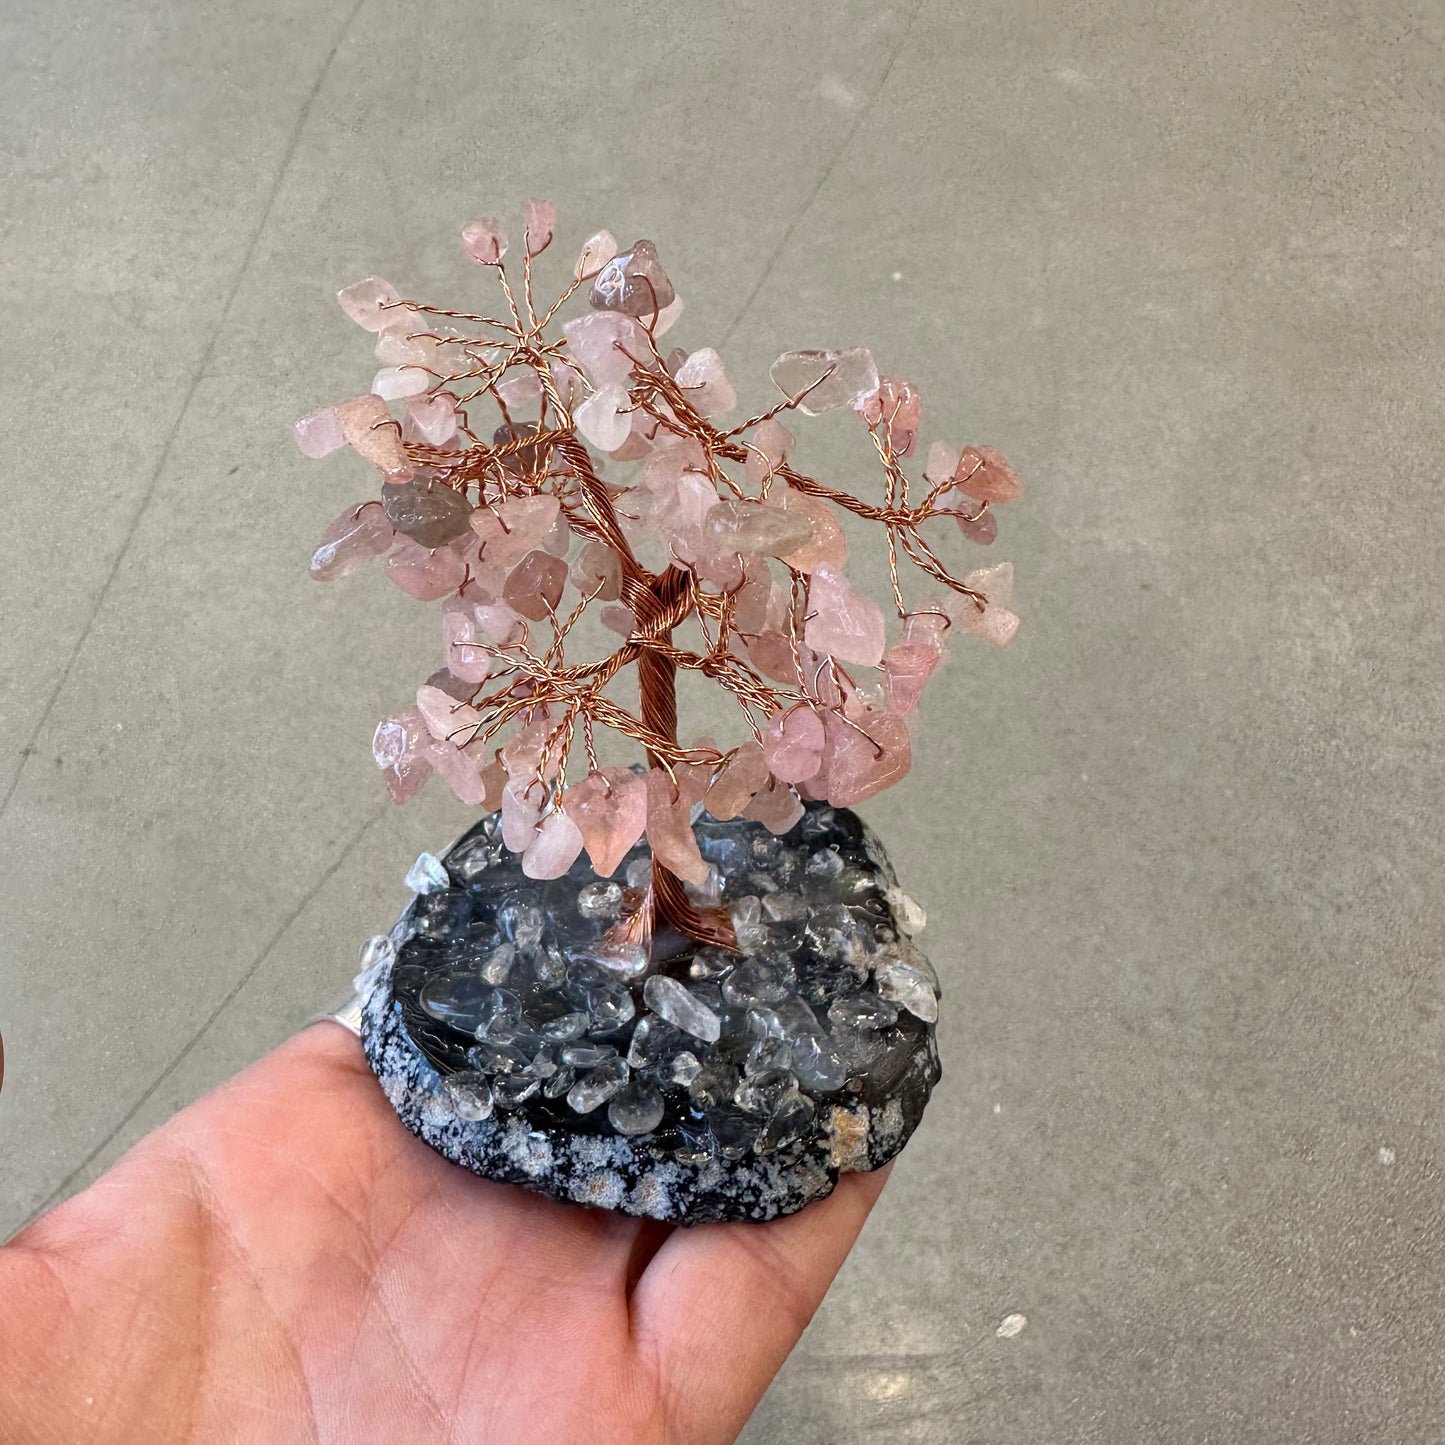 Rose Quartz Natural Gemstone Tree of Life with Agate Base